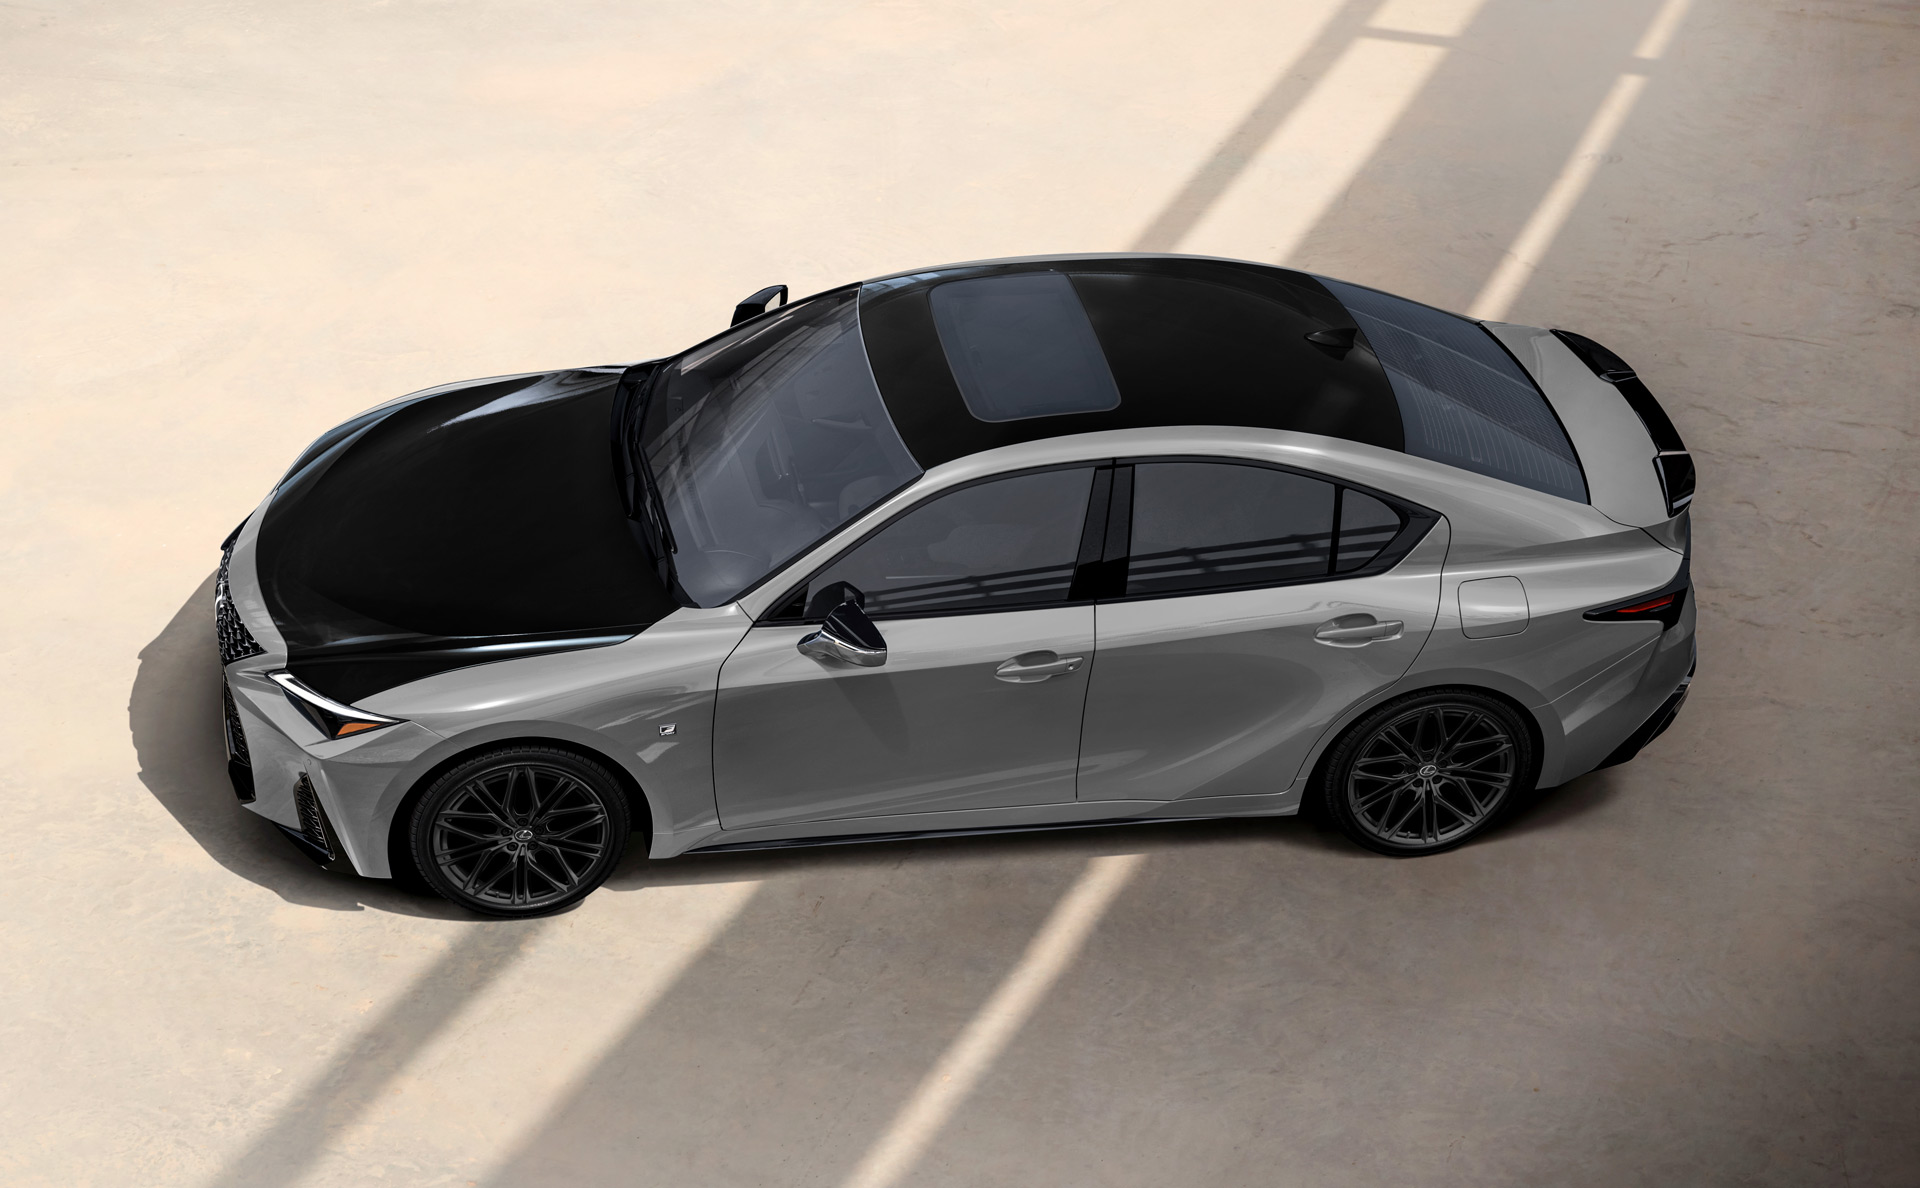 2023 Lexus IS, Lightyear 0, Grand Wagoneer EV conversion Car News